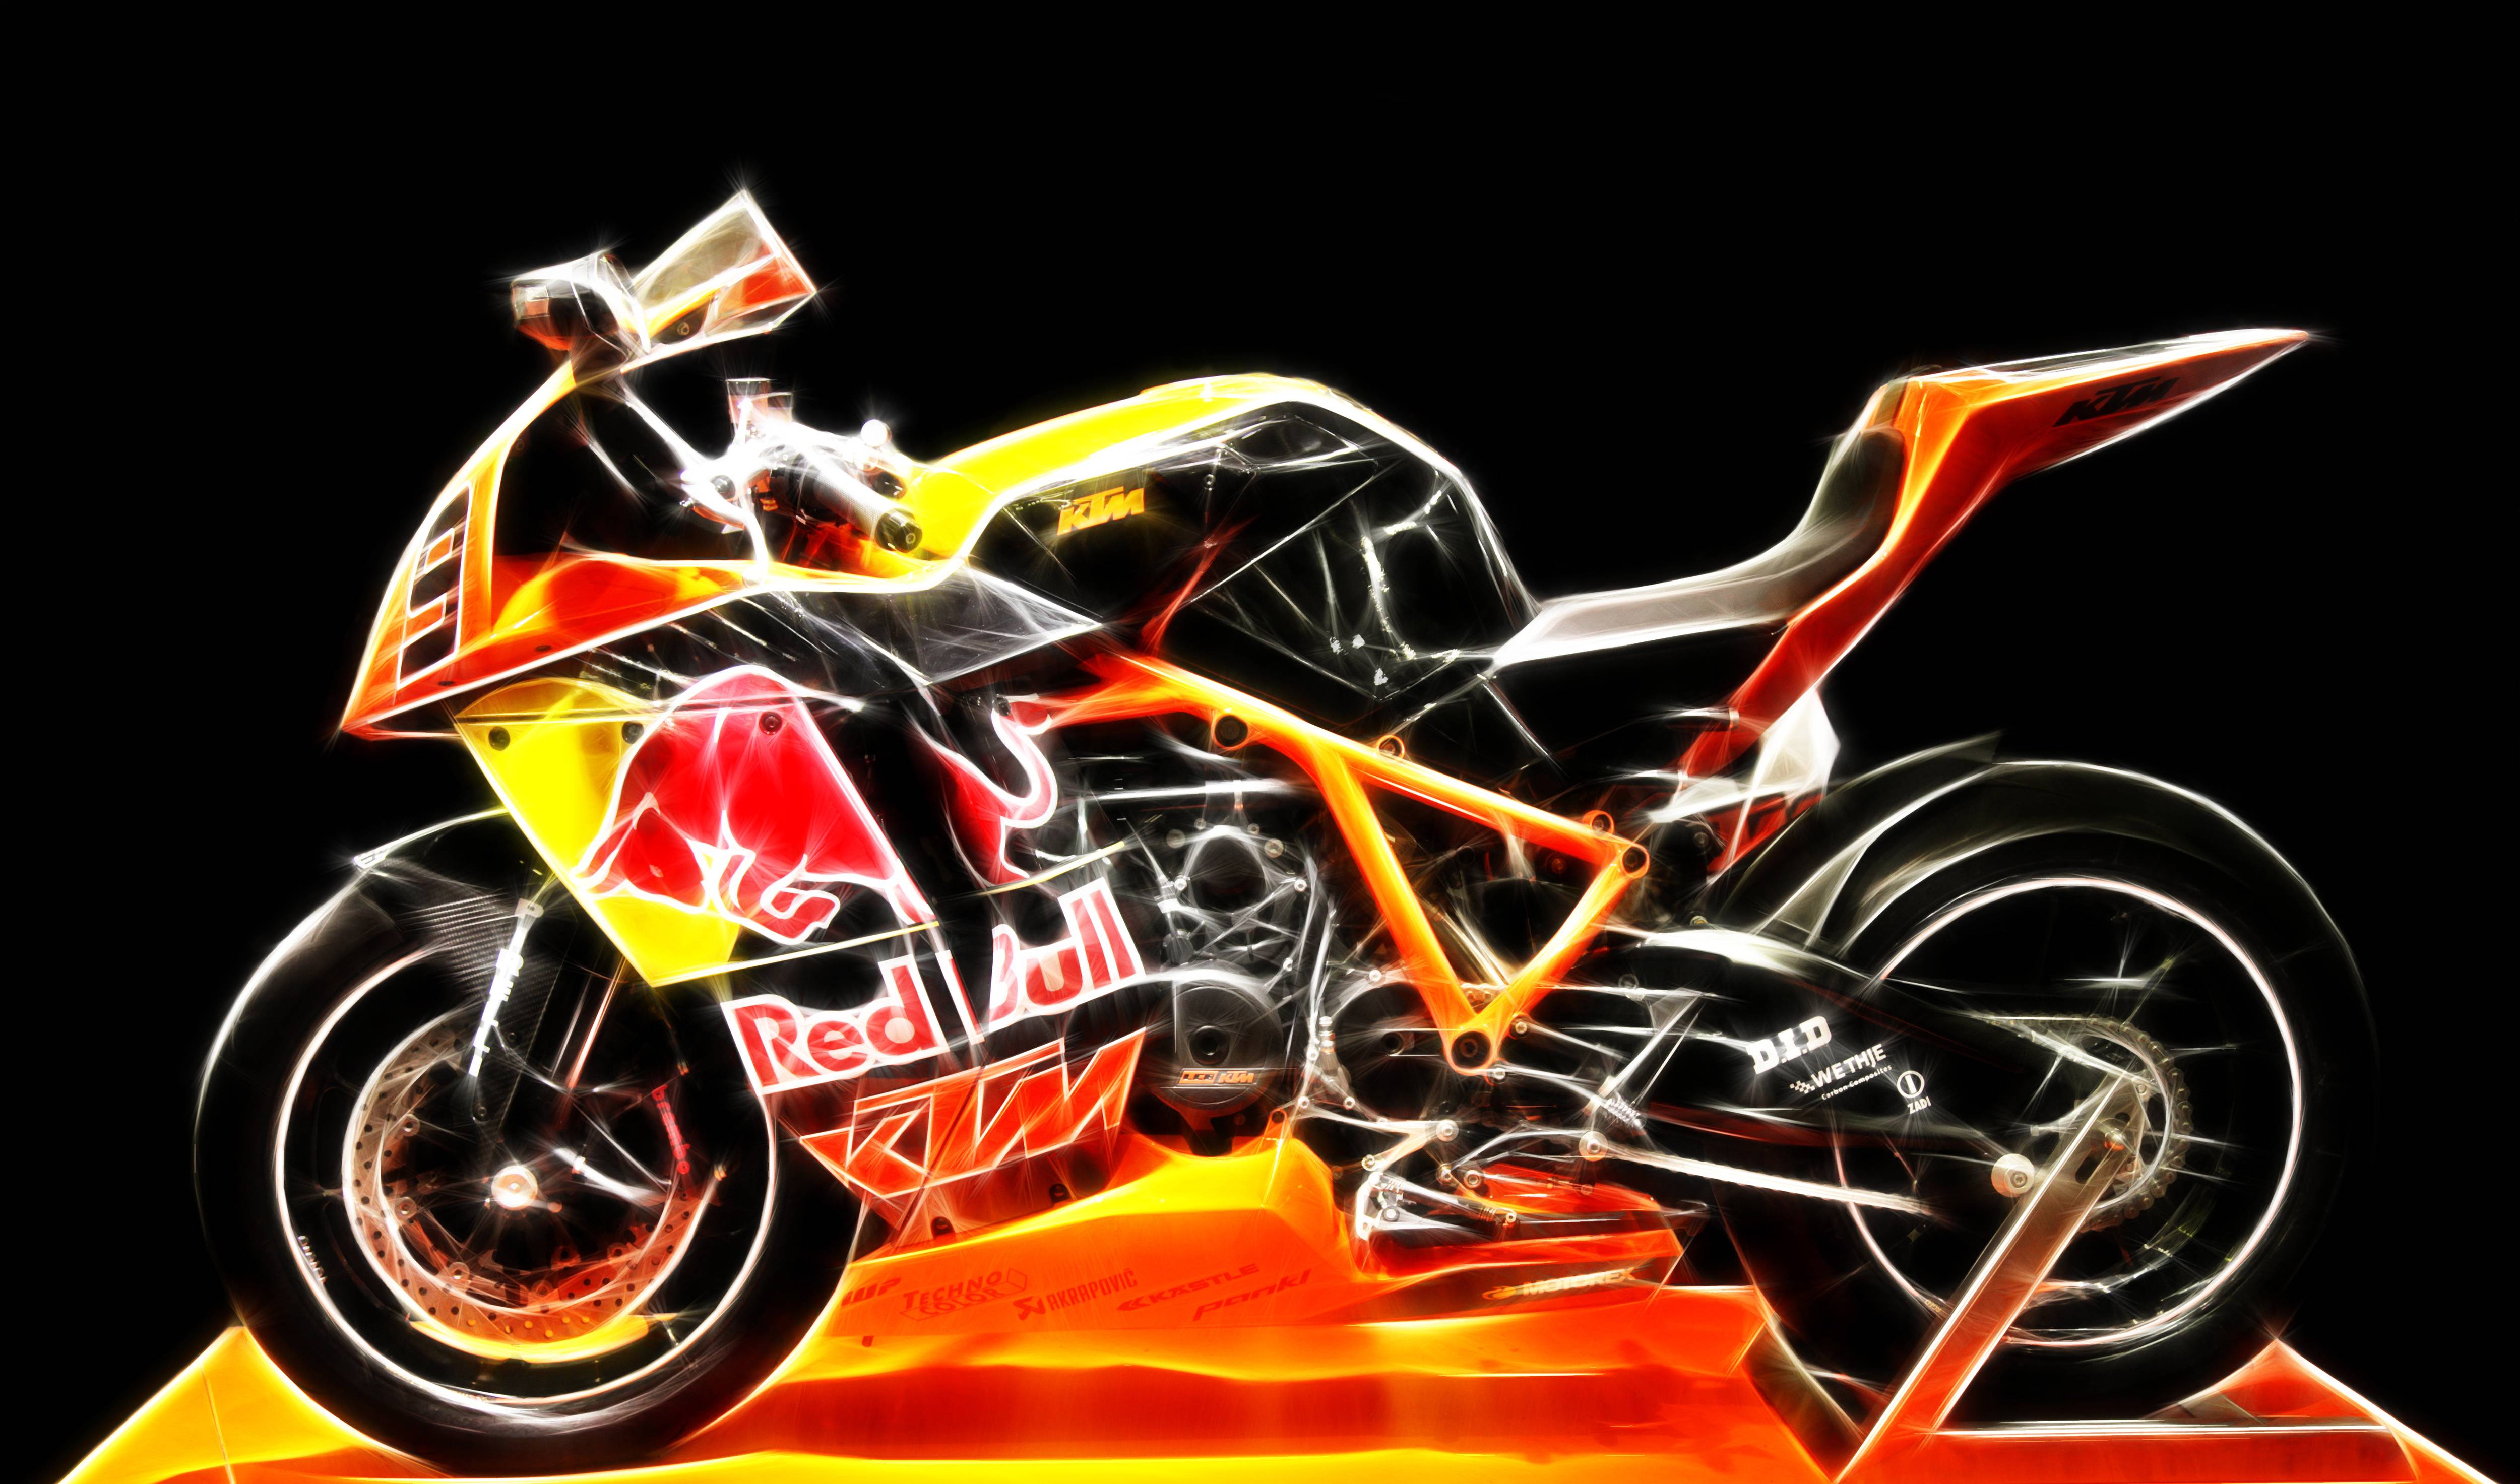 Motorcycle Racing Wallpaper. Motorcycle Racing Background